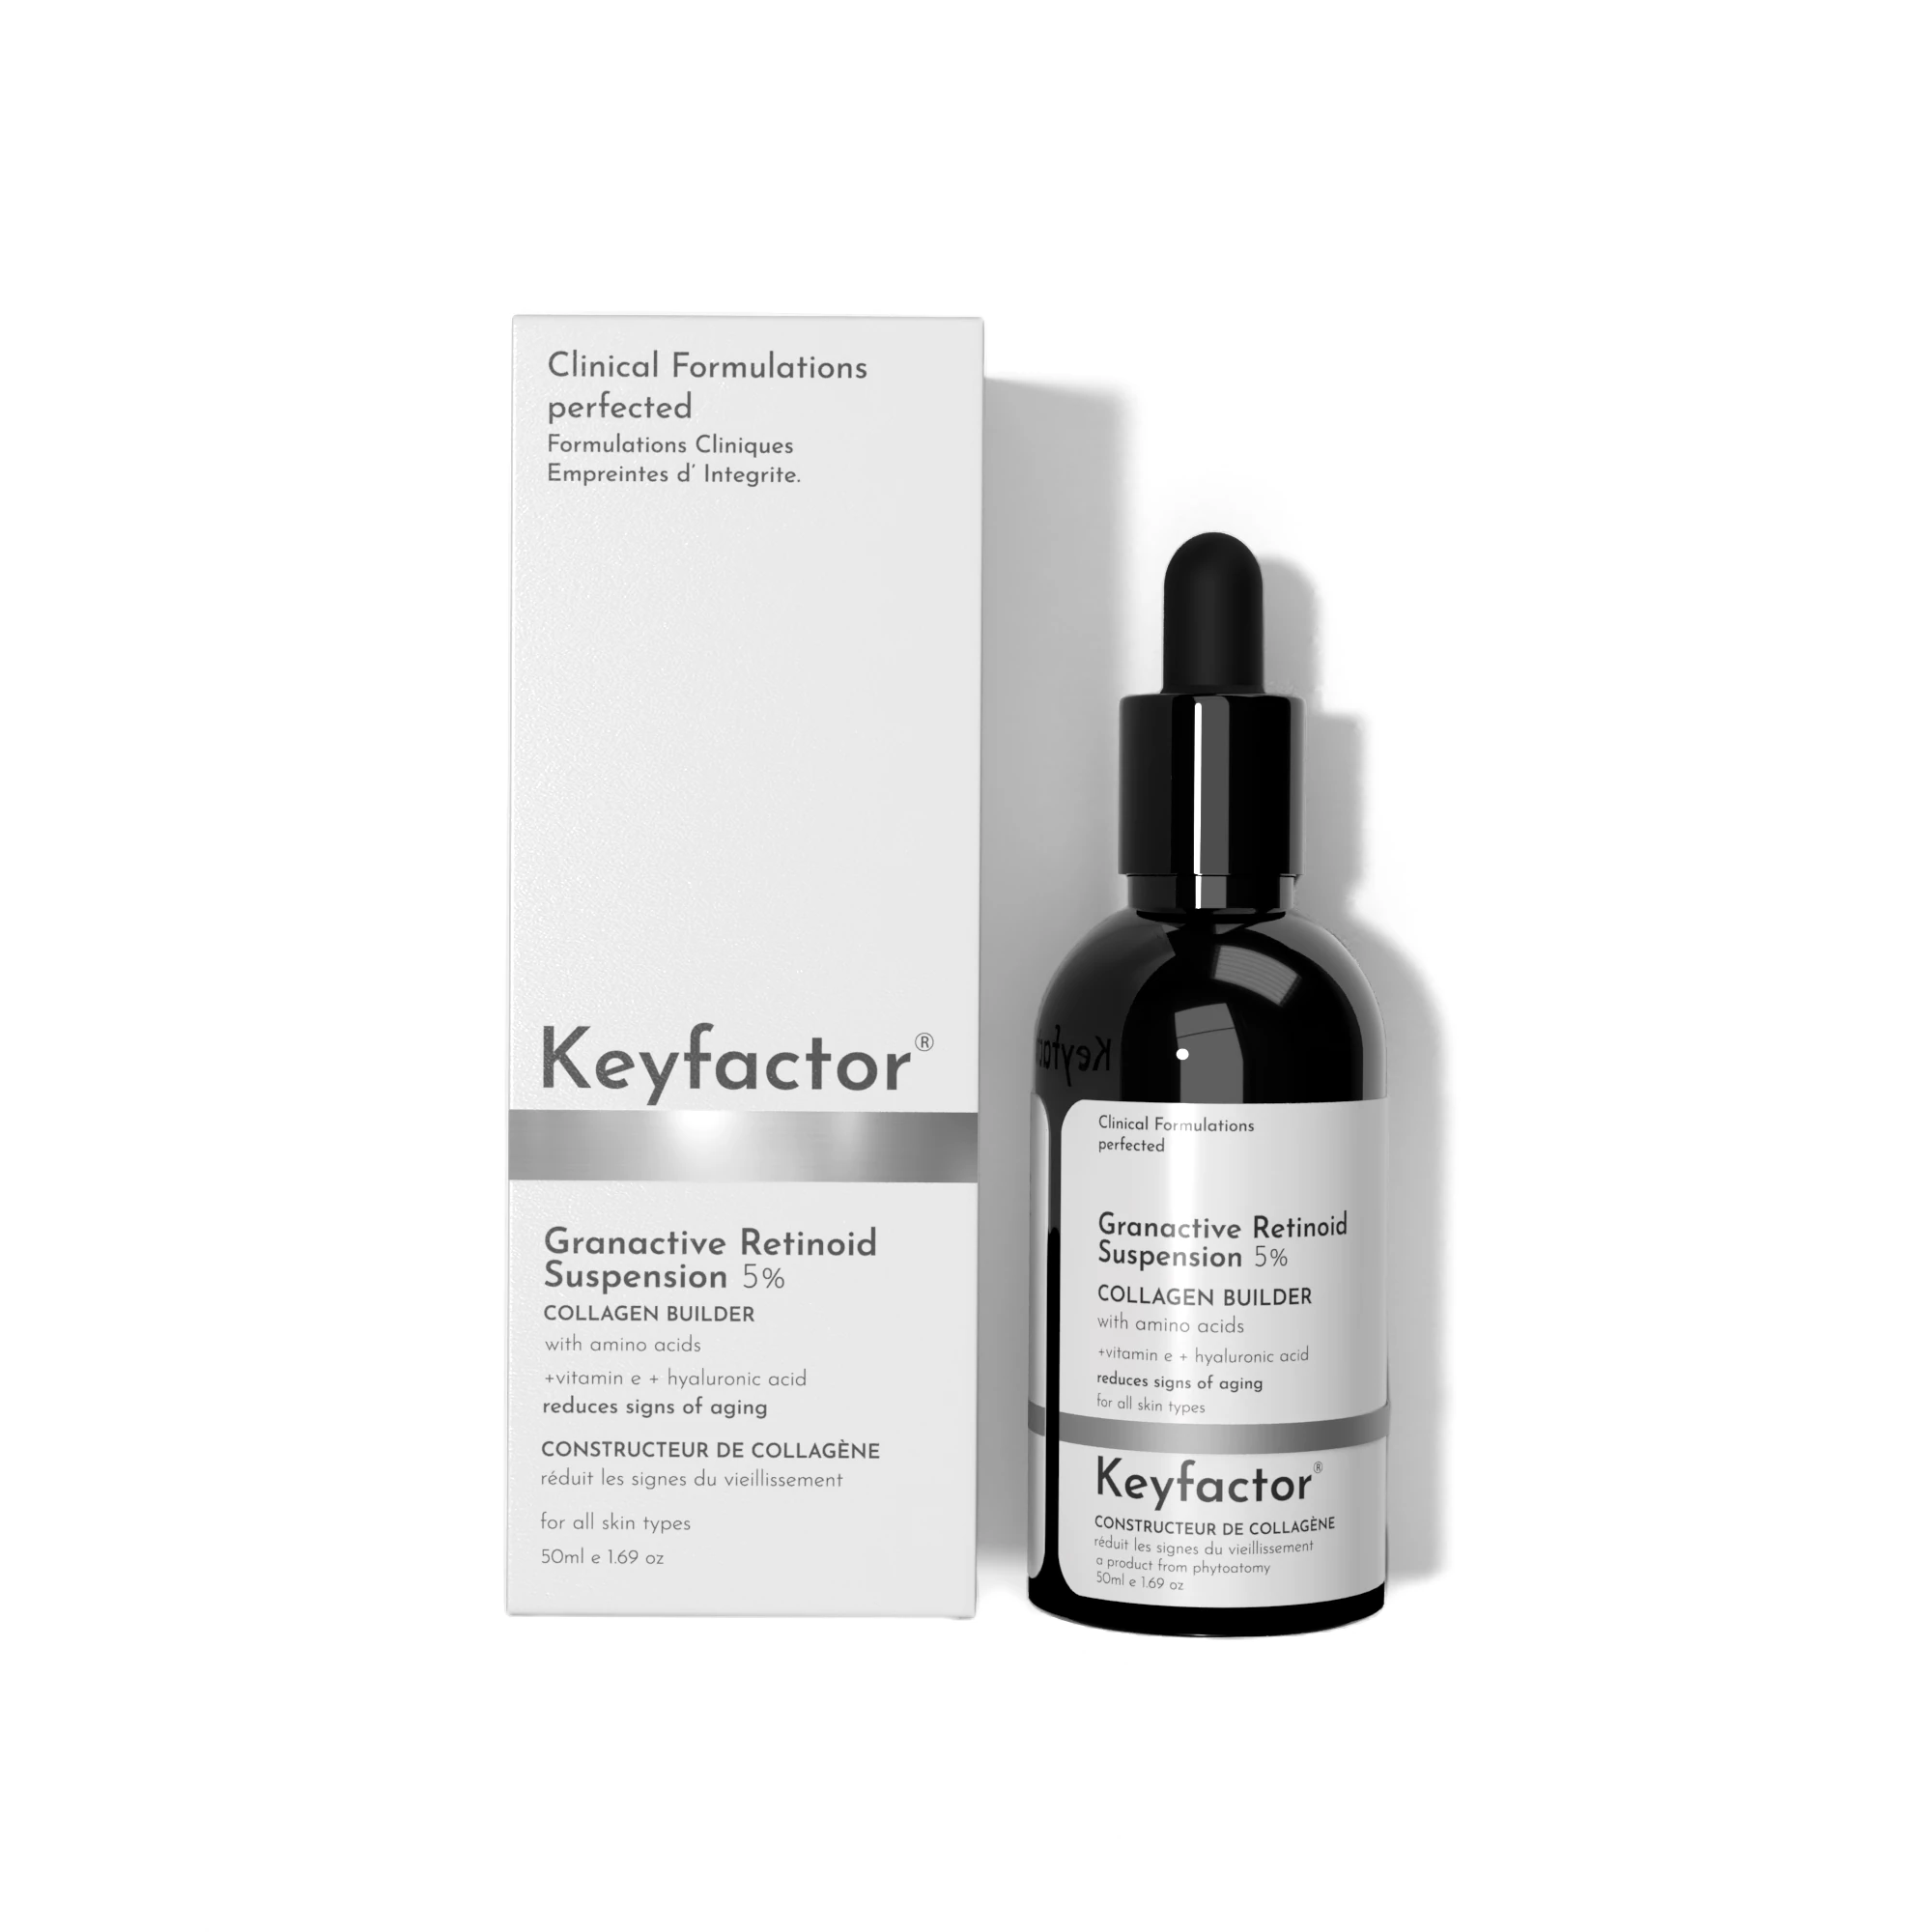 Kf-Granactive Retinoid Suspension 5% -50Ml.(for finr lines & wrinkles)